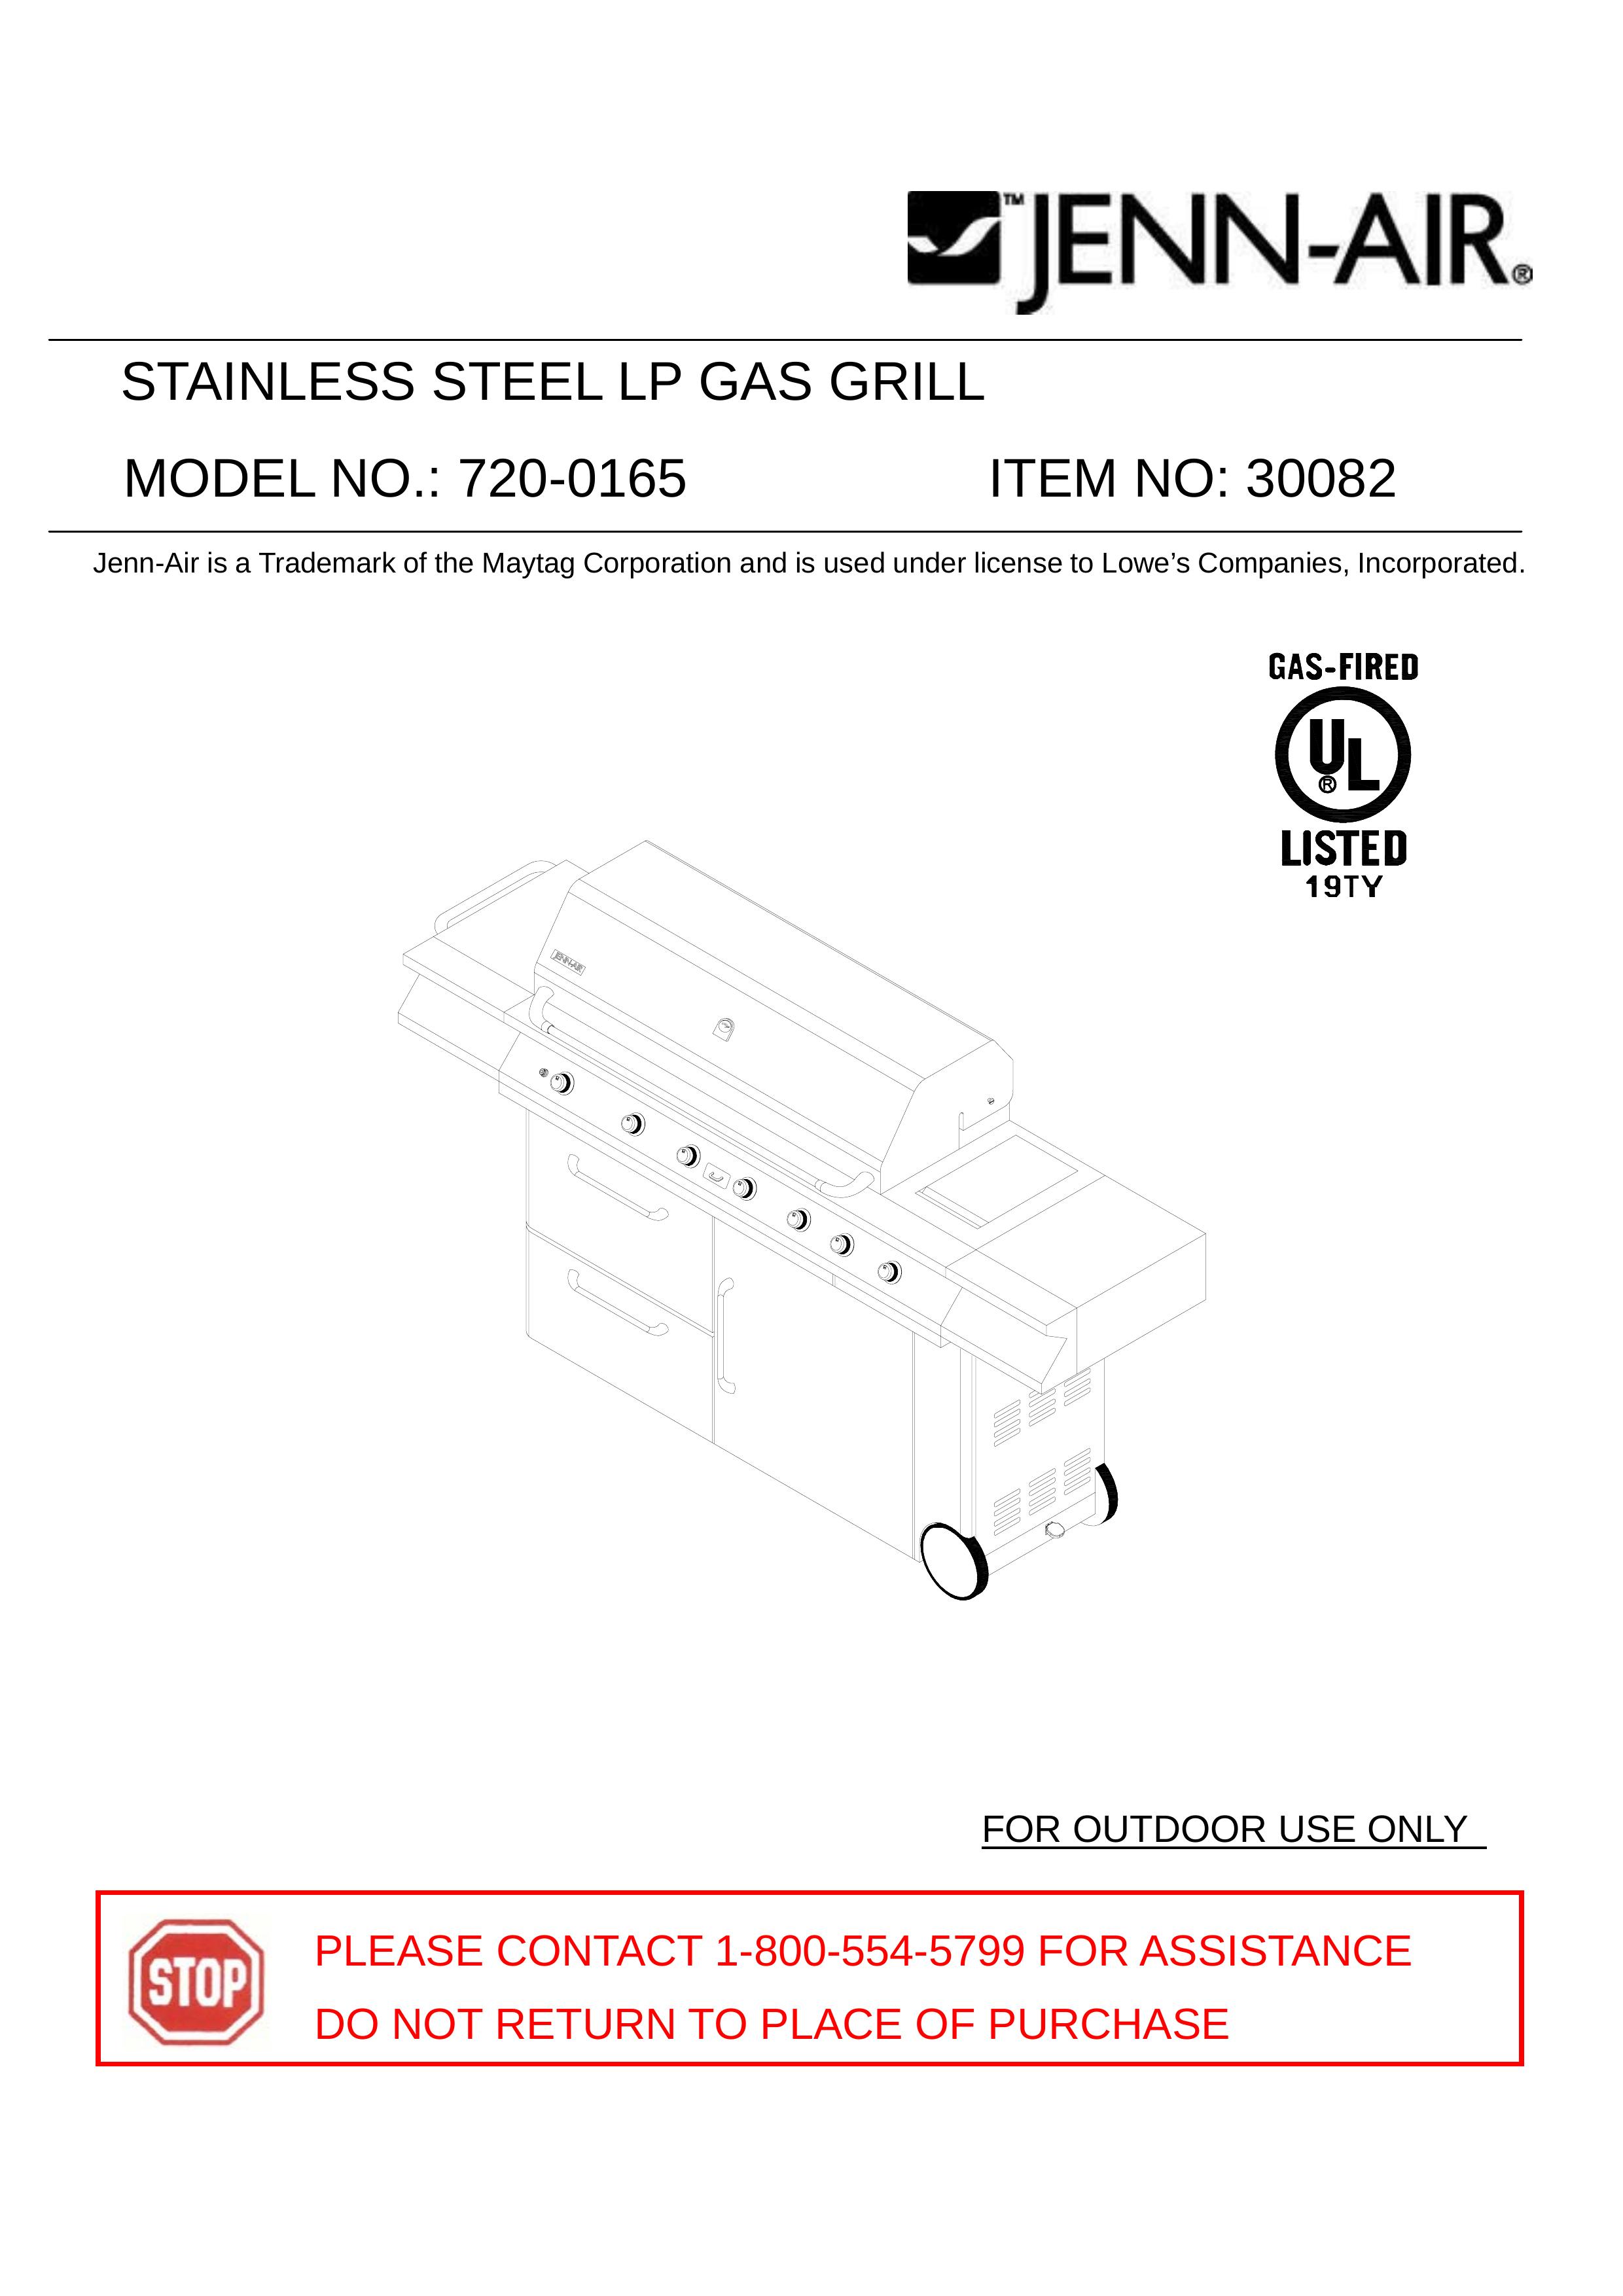 Jenn-Air 720-0165 Gas Grill User Manual